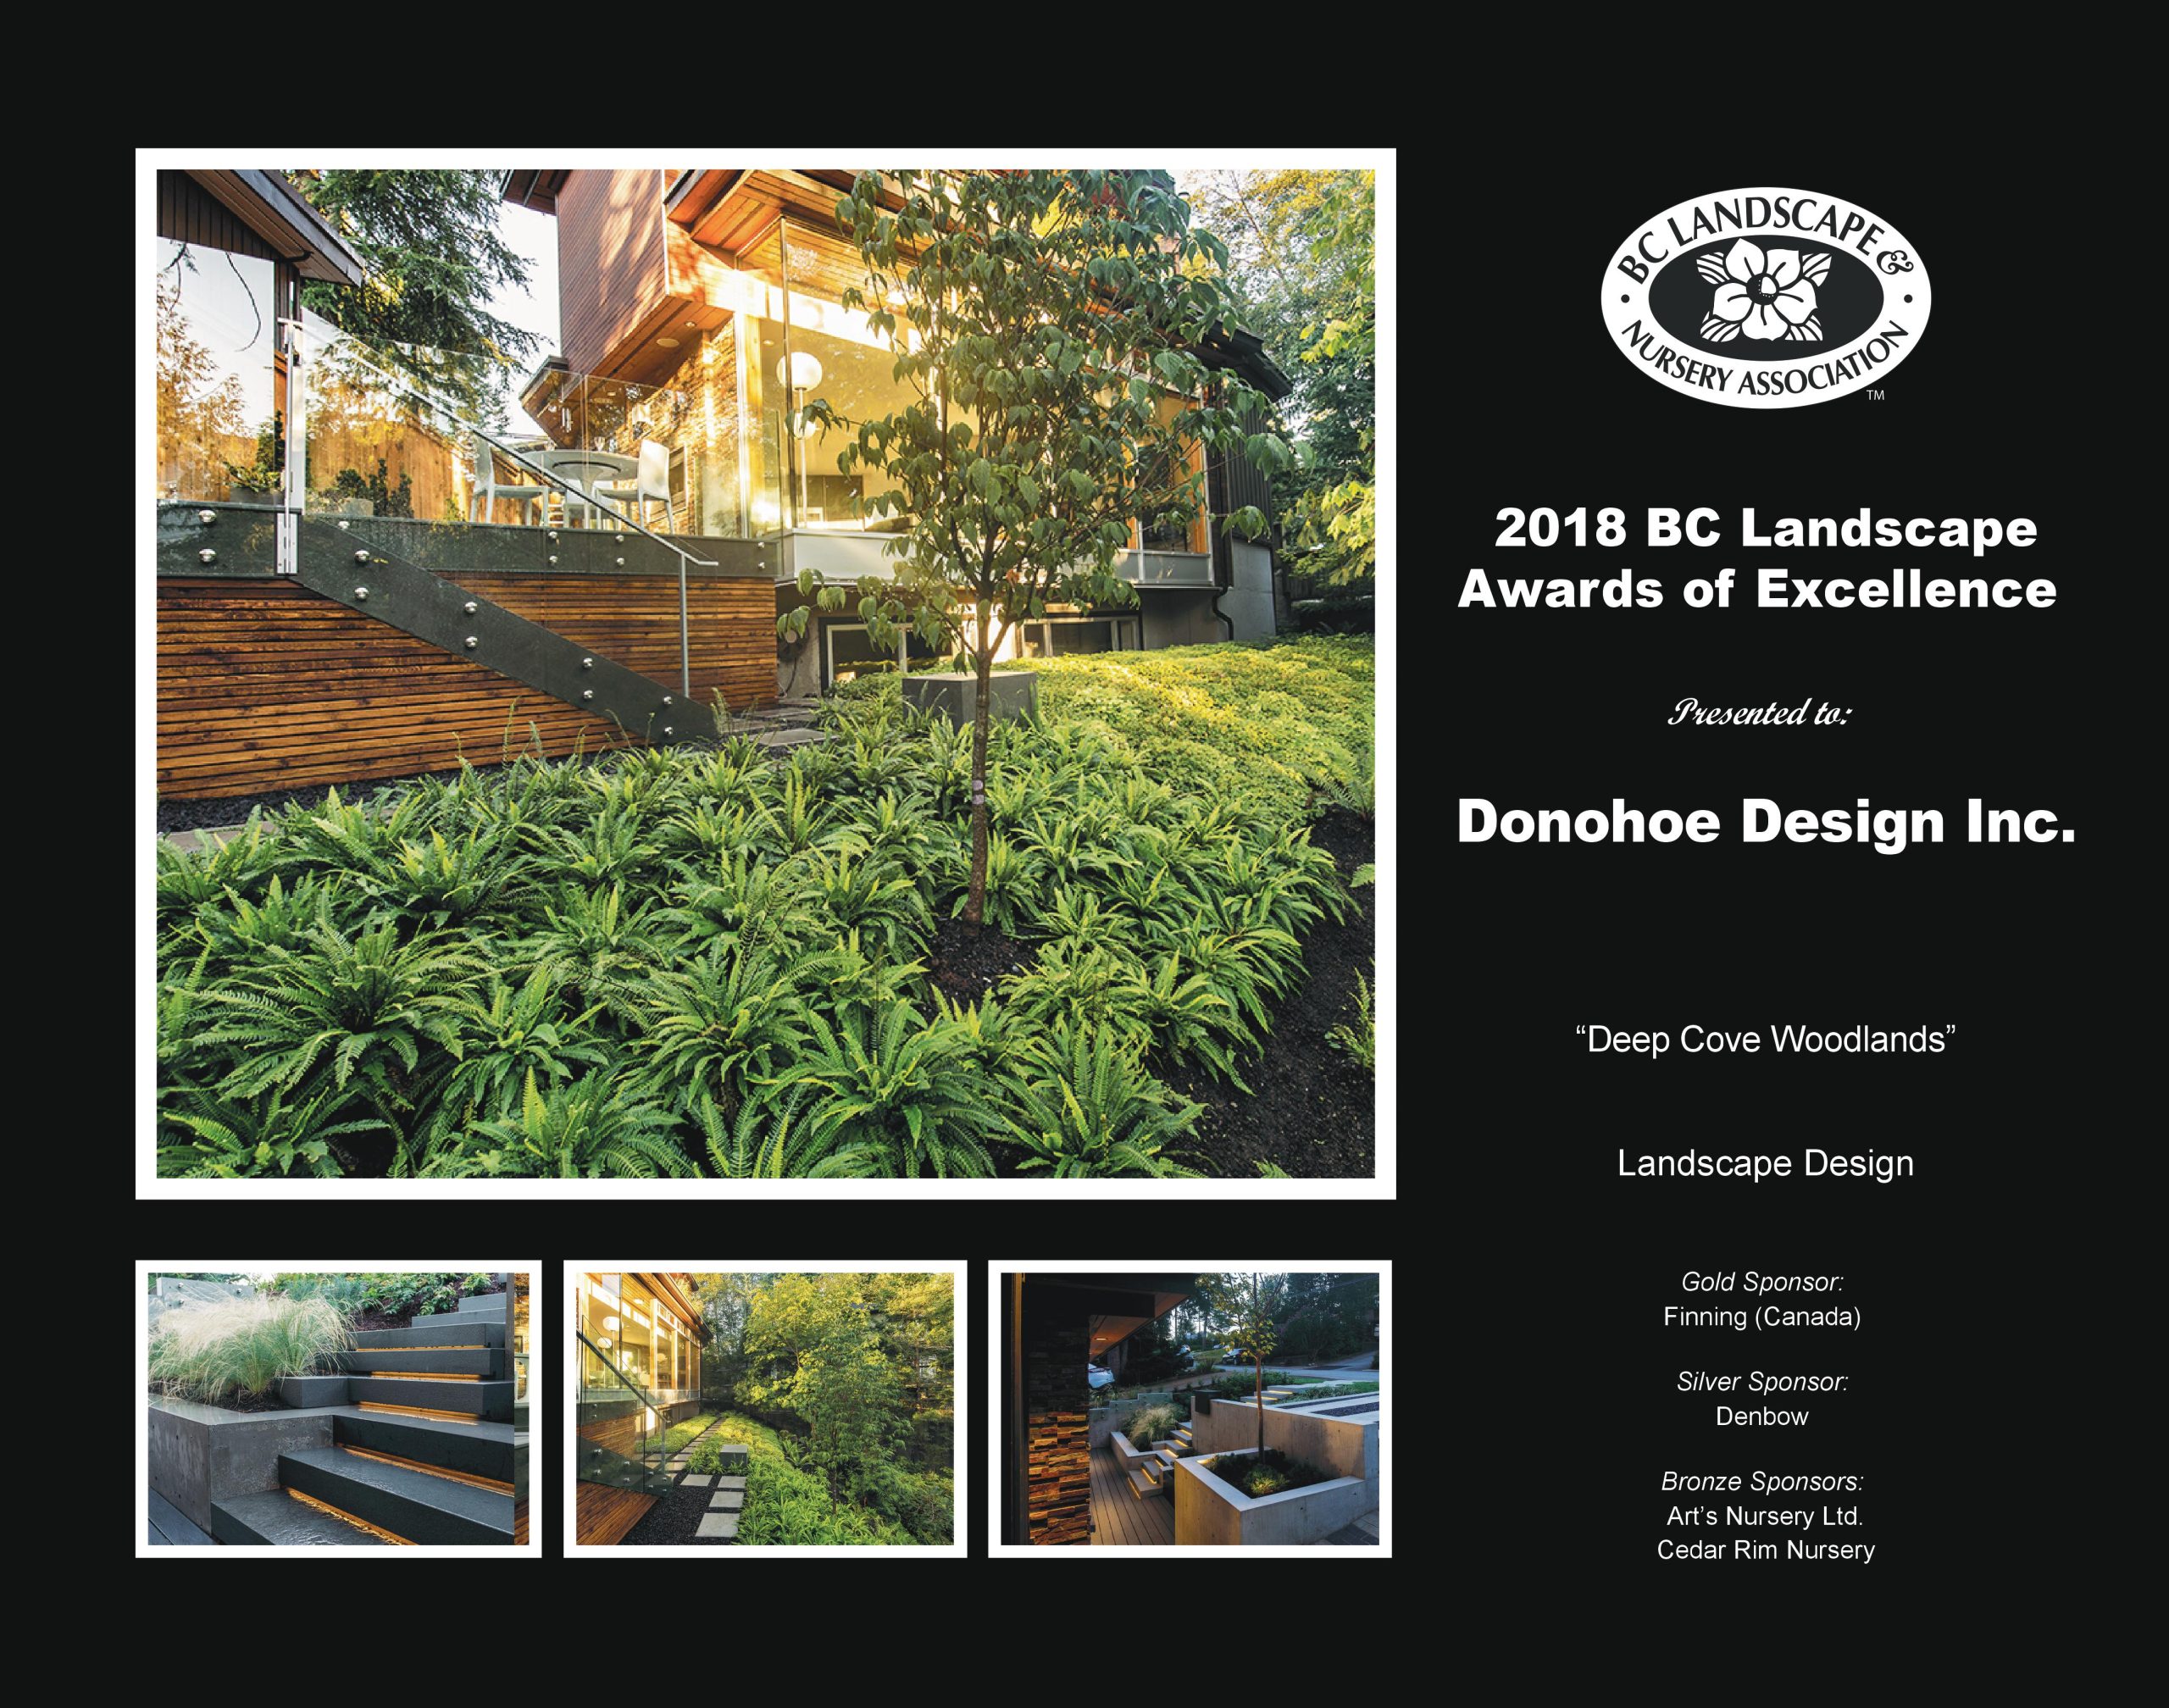 Landscape Award of Excellence - Deep Cove Woodlands